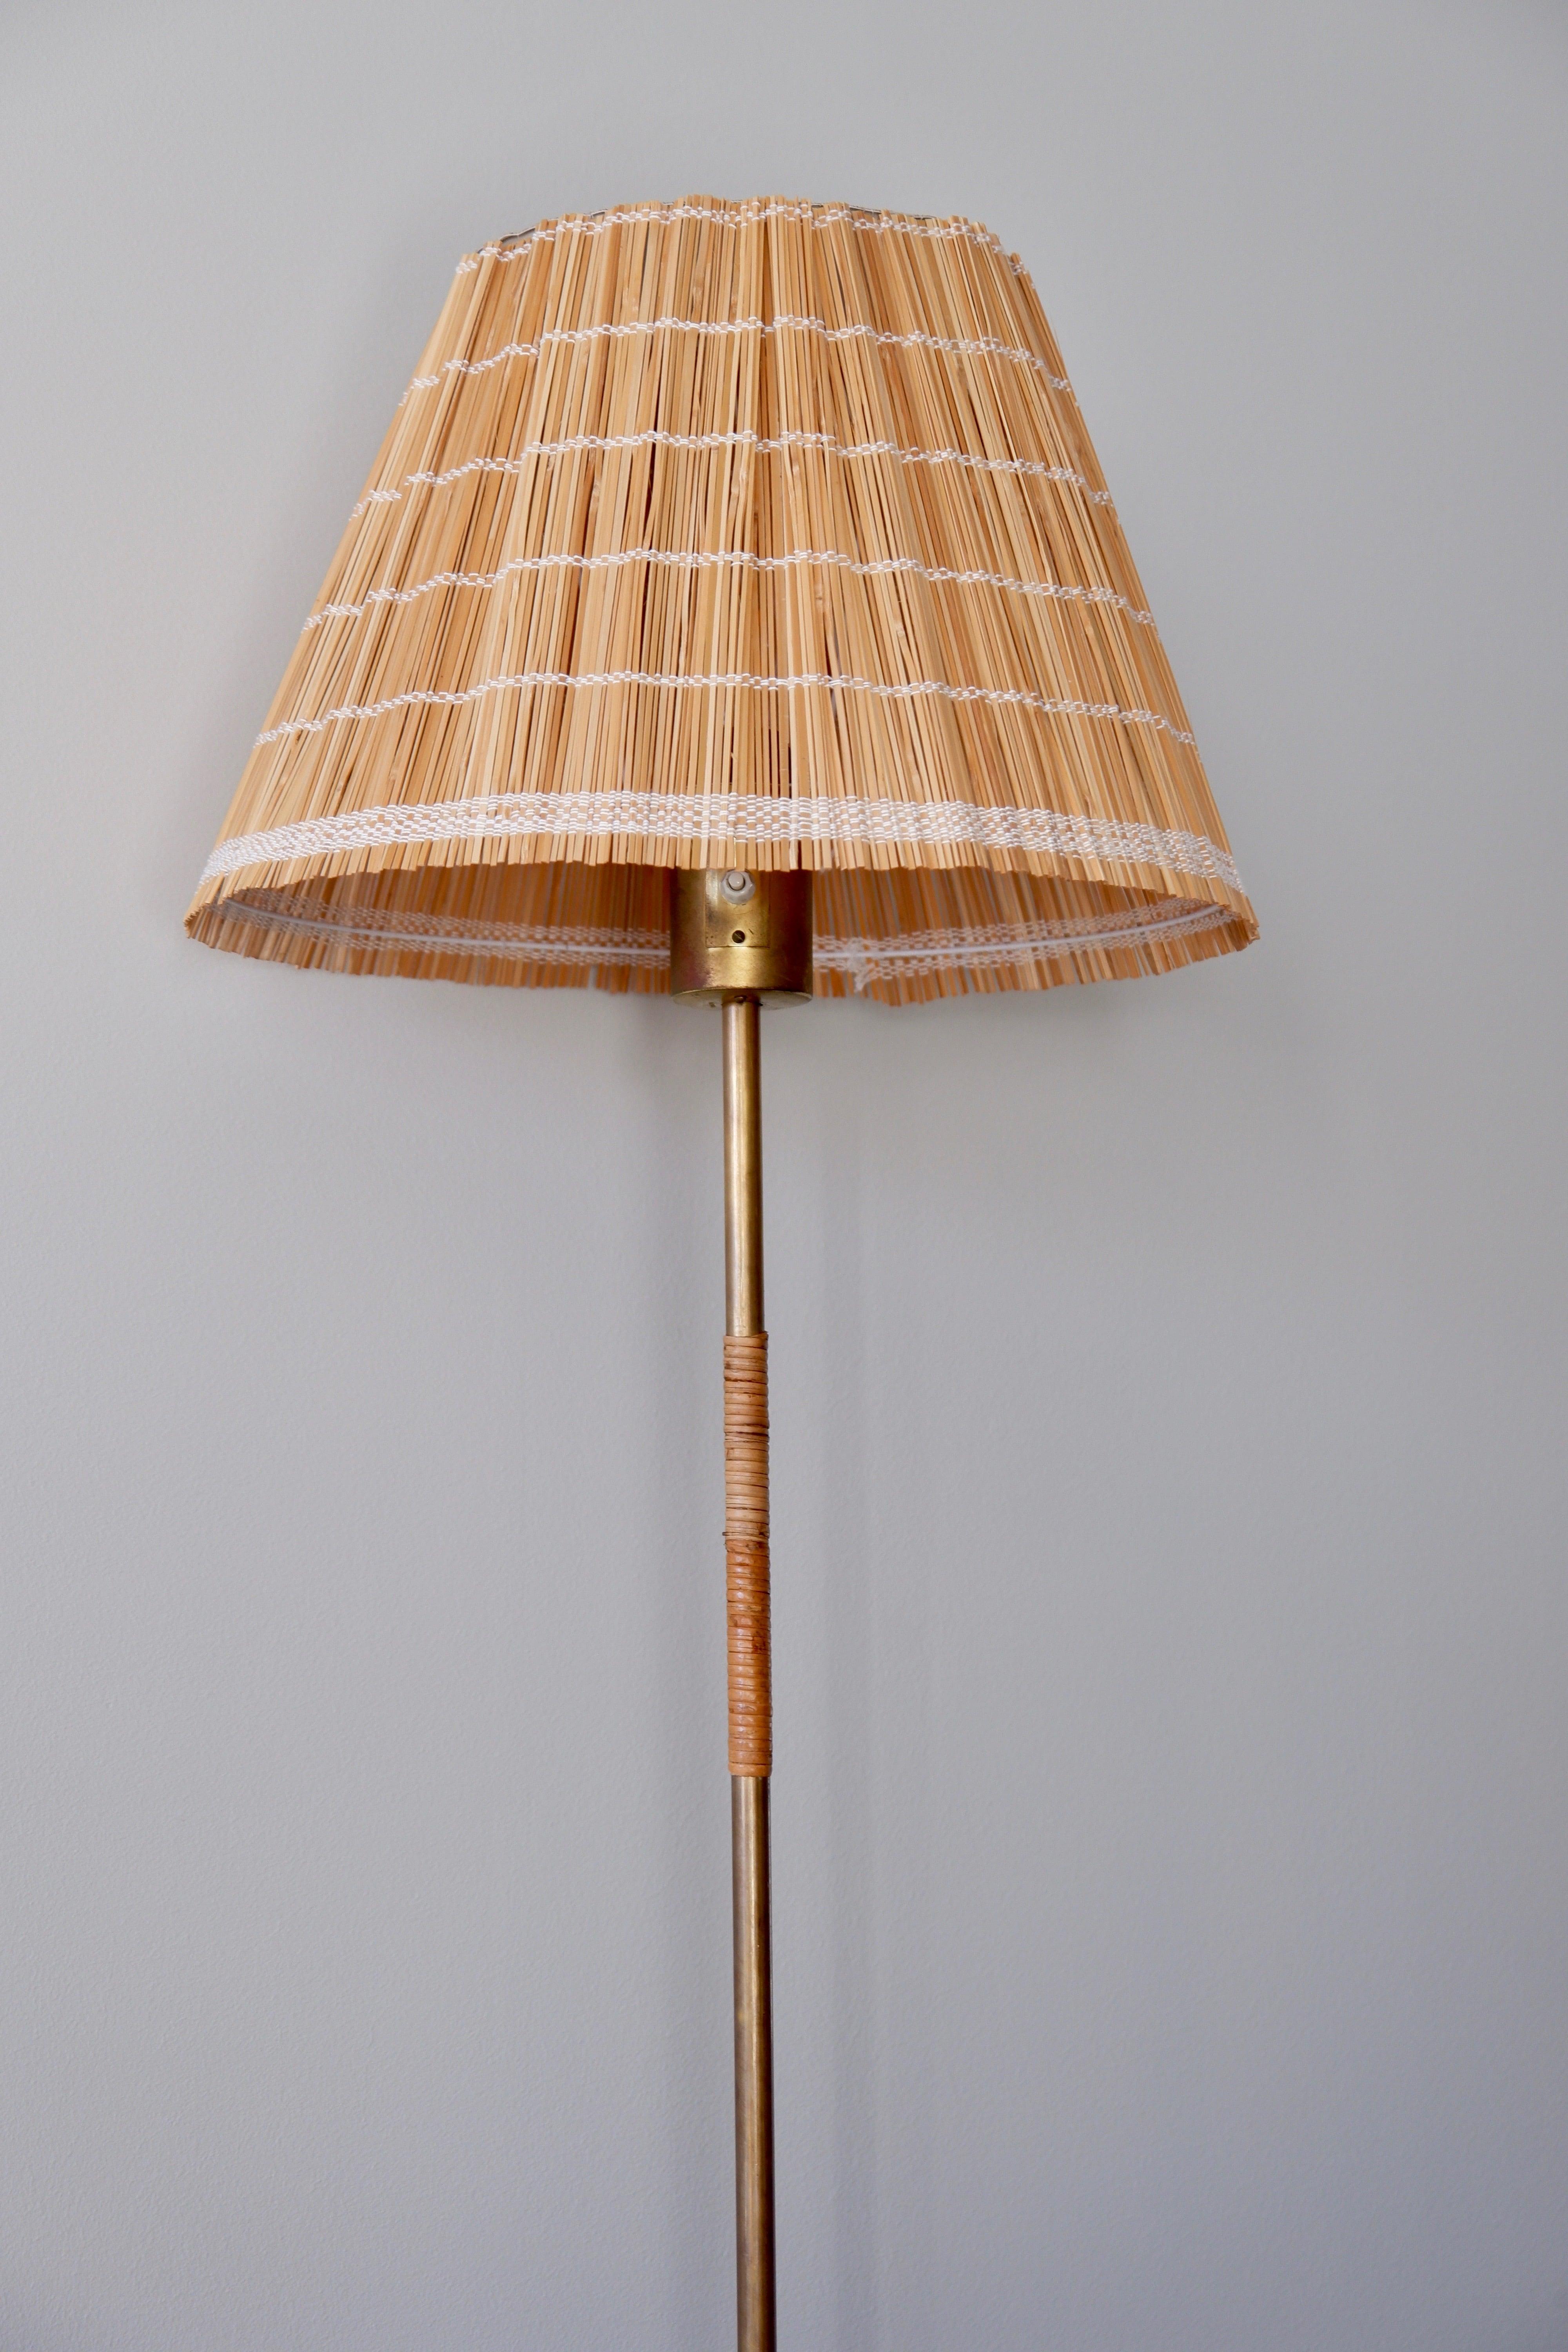 Scandinavian Modern Paavo Tynell Floor Lamp Model K10-13 for Idman circa 1950, Woodstraw Shade